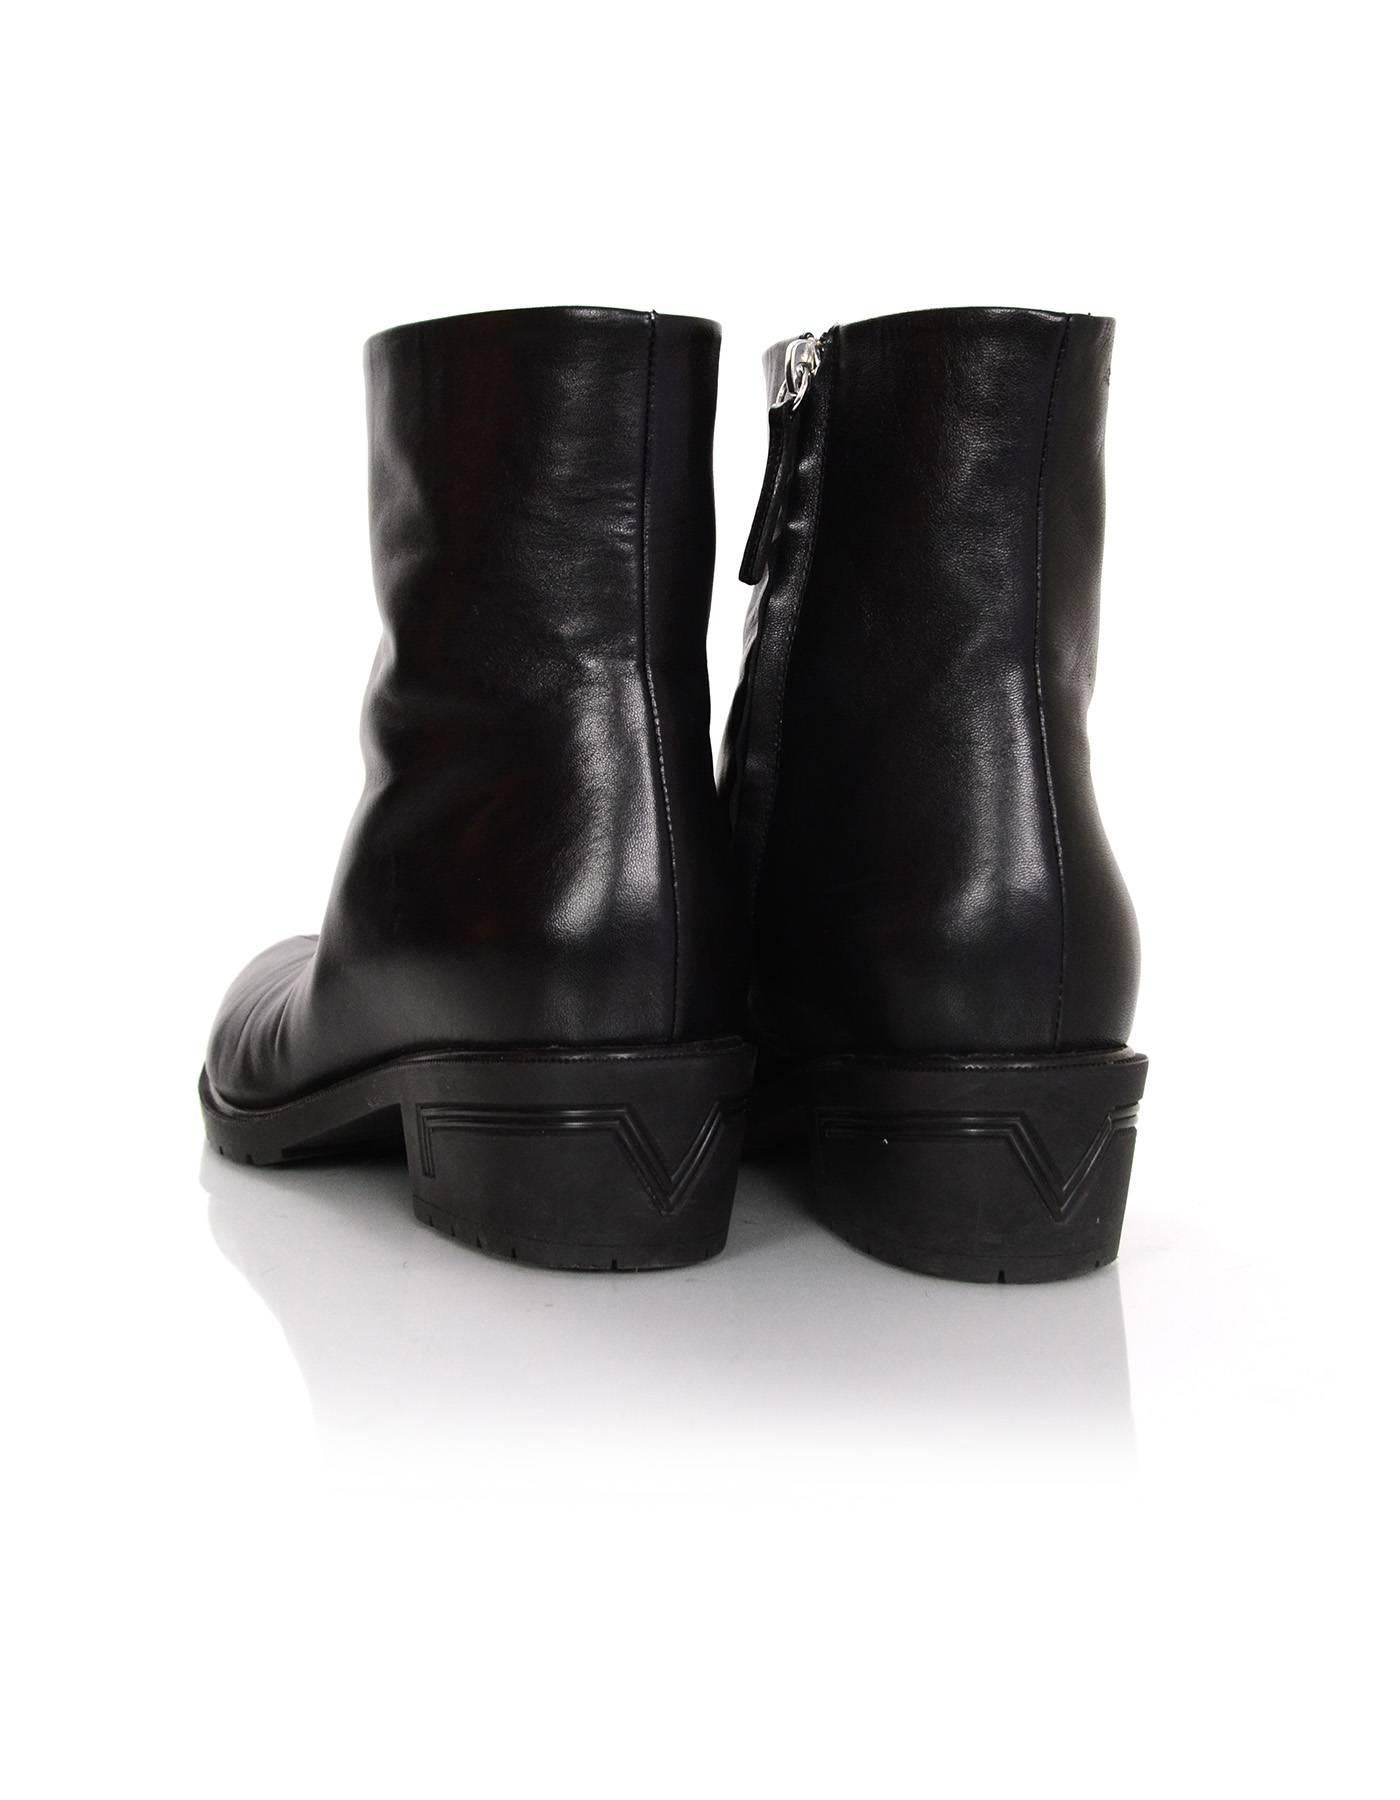 Women's Giuseppe Zanotti Black Leather Ankle Boots Sz 38